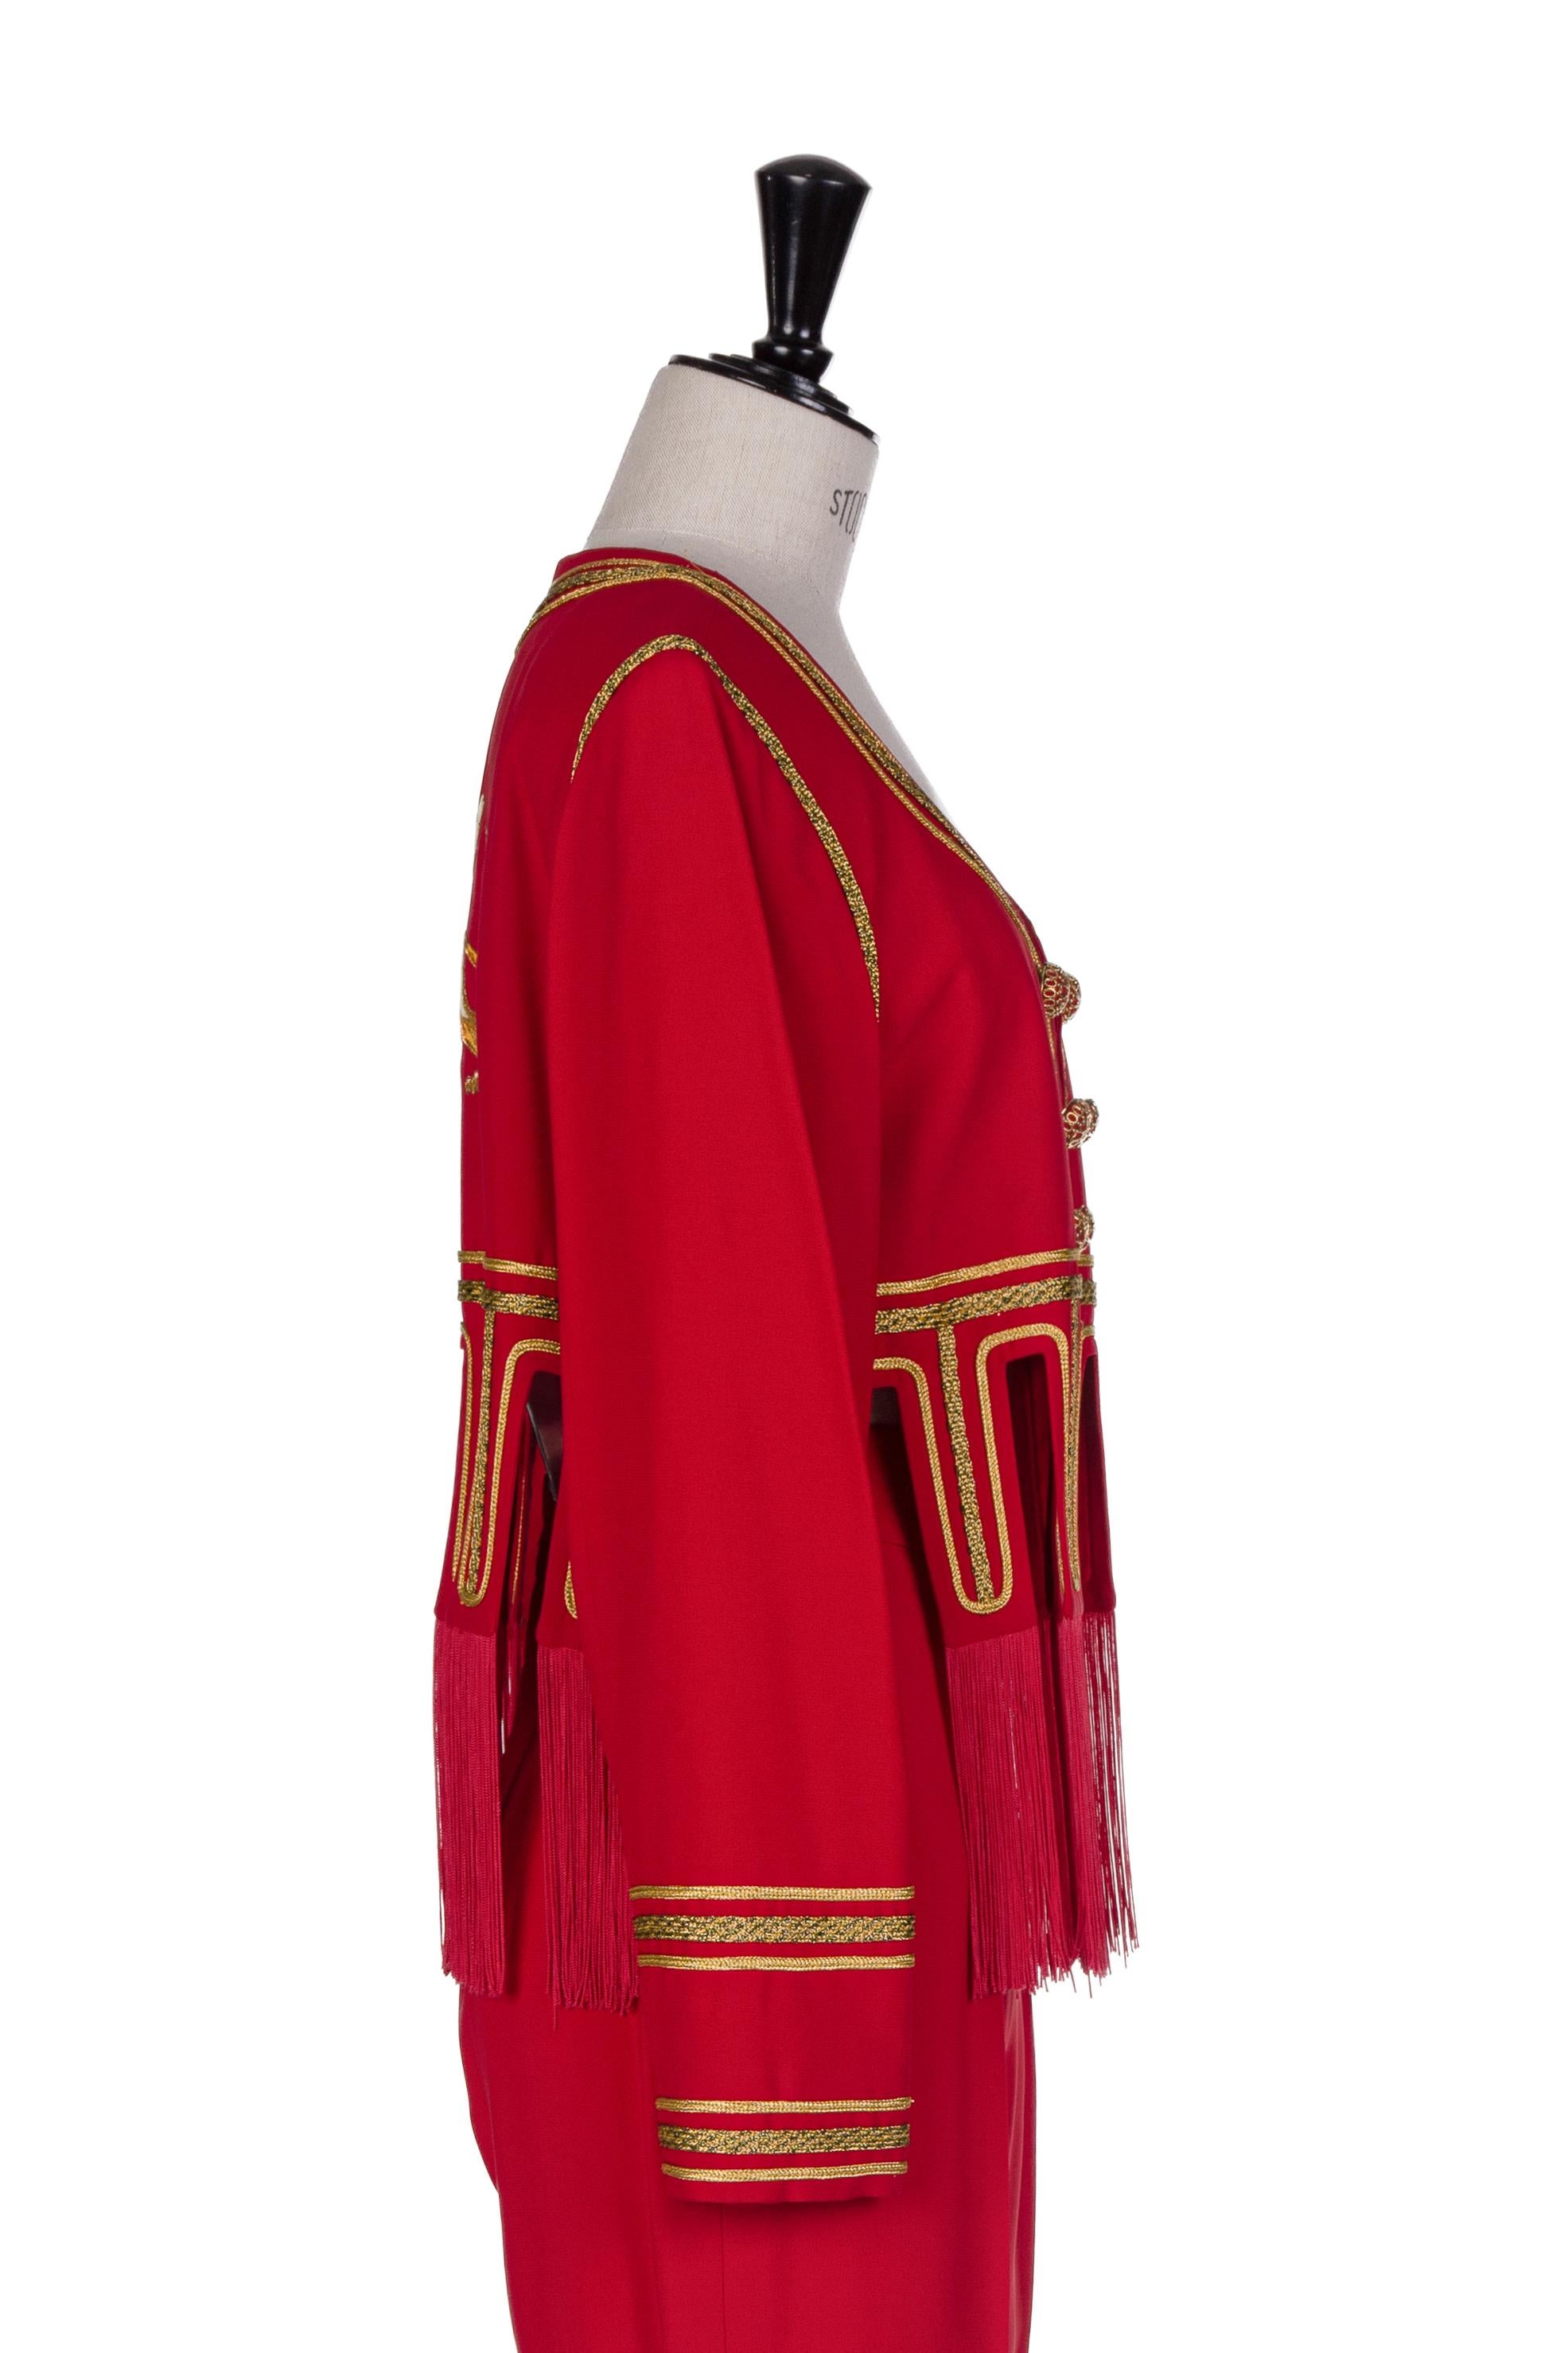 1989 MOSCHINO COUTURE Red I Love Venice Lion Appliquéd Jacket & Pant Suit For Sale 2